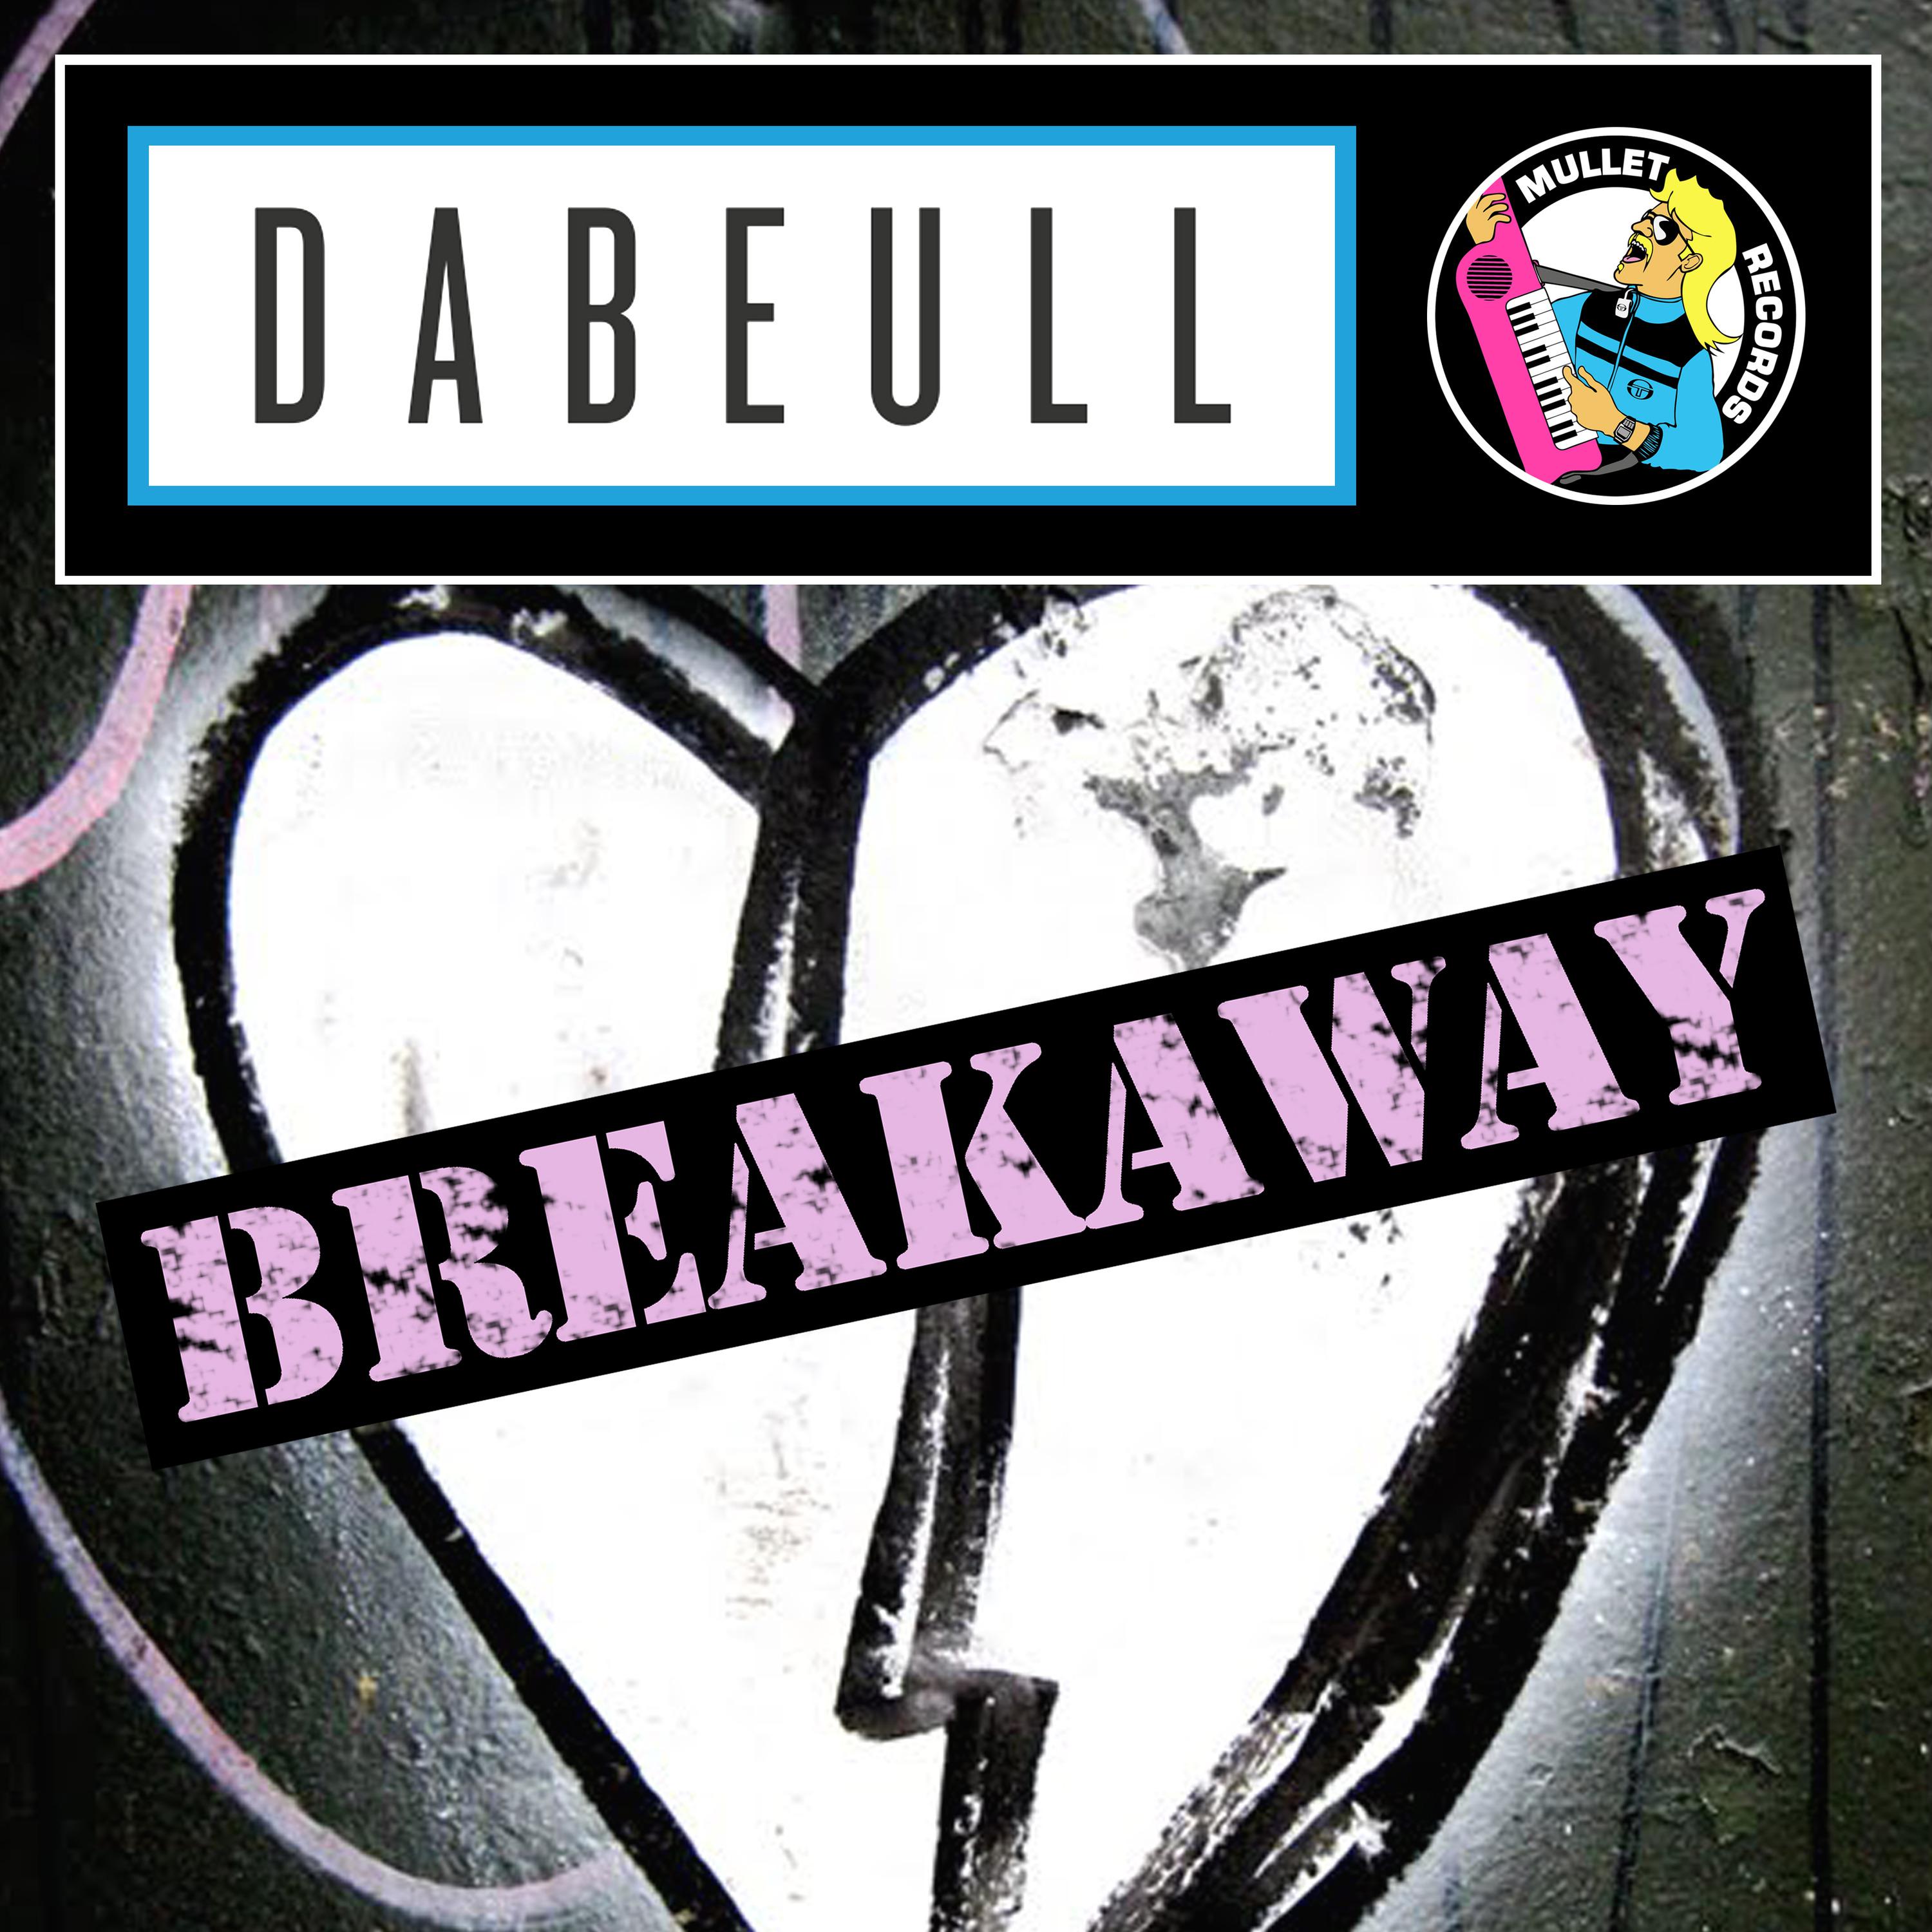 Dabeull - Breakaway (Radio Edit)